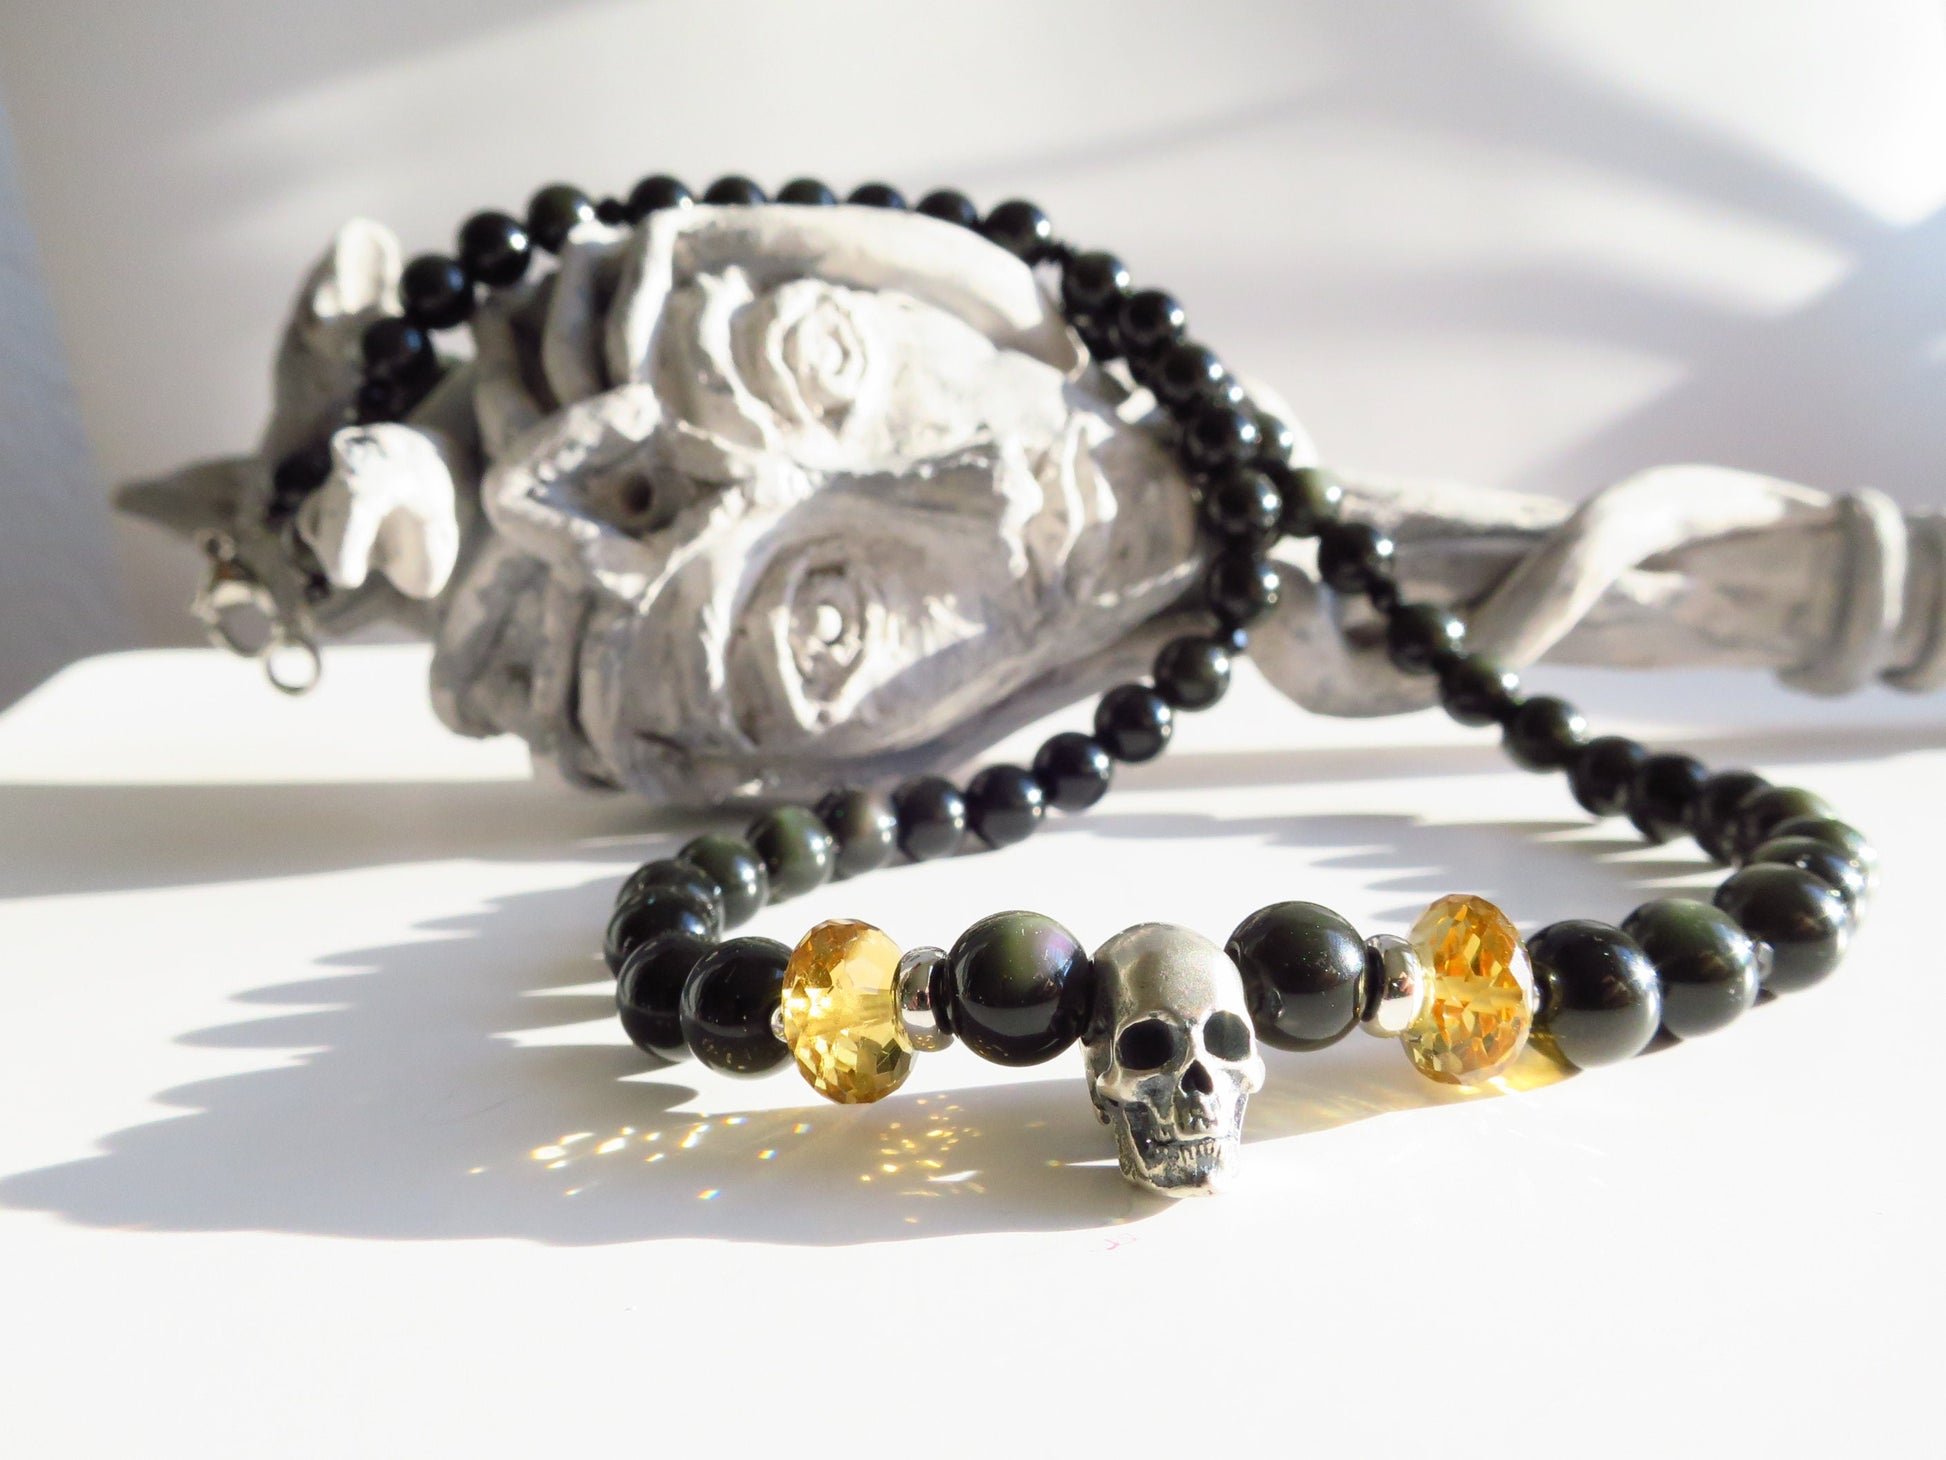 Regenbogen-Obsidan-Halskette mit Sterling Silber 925 Schädel Totenkopf Edelstahl Verschluss runde obsidian Perlen Citrin facettiert